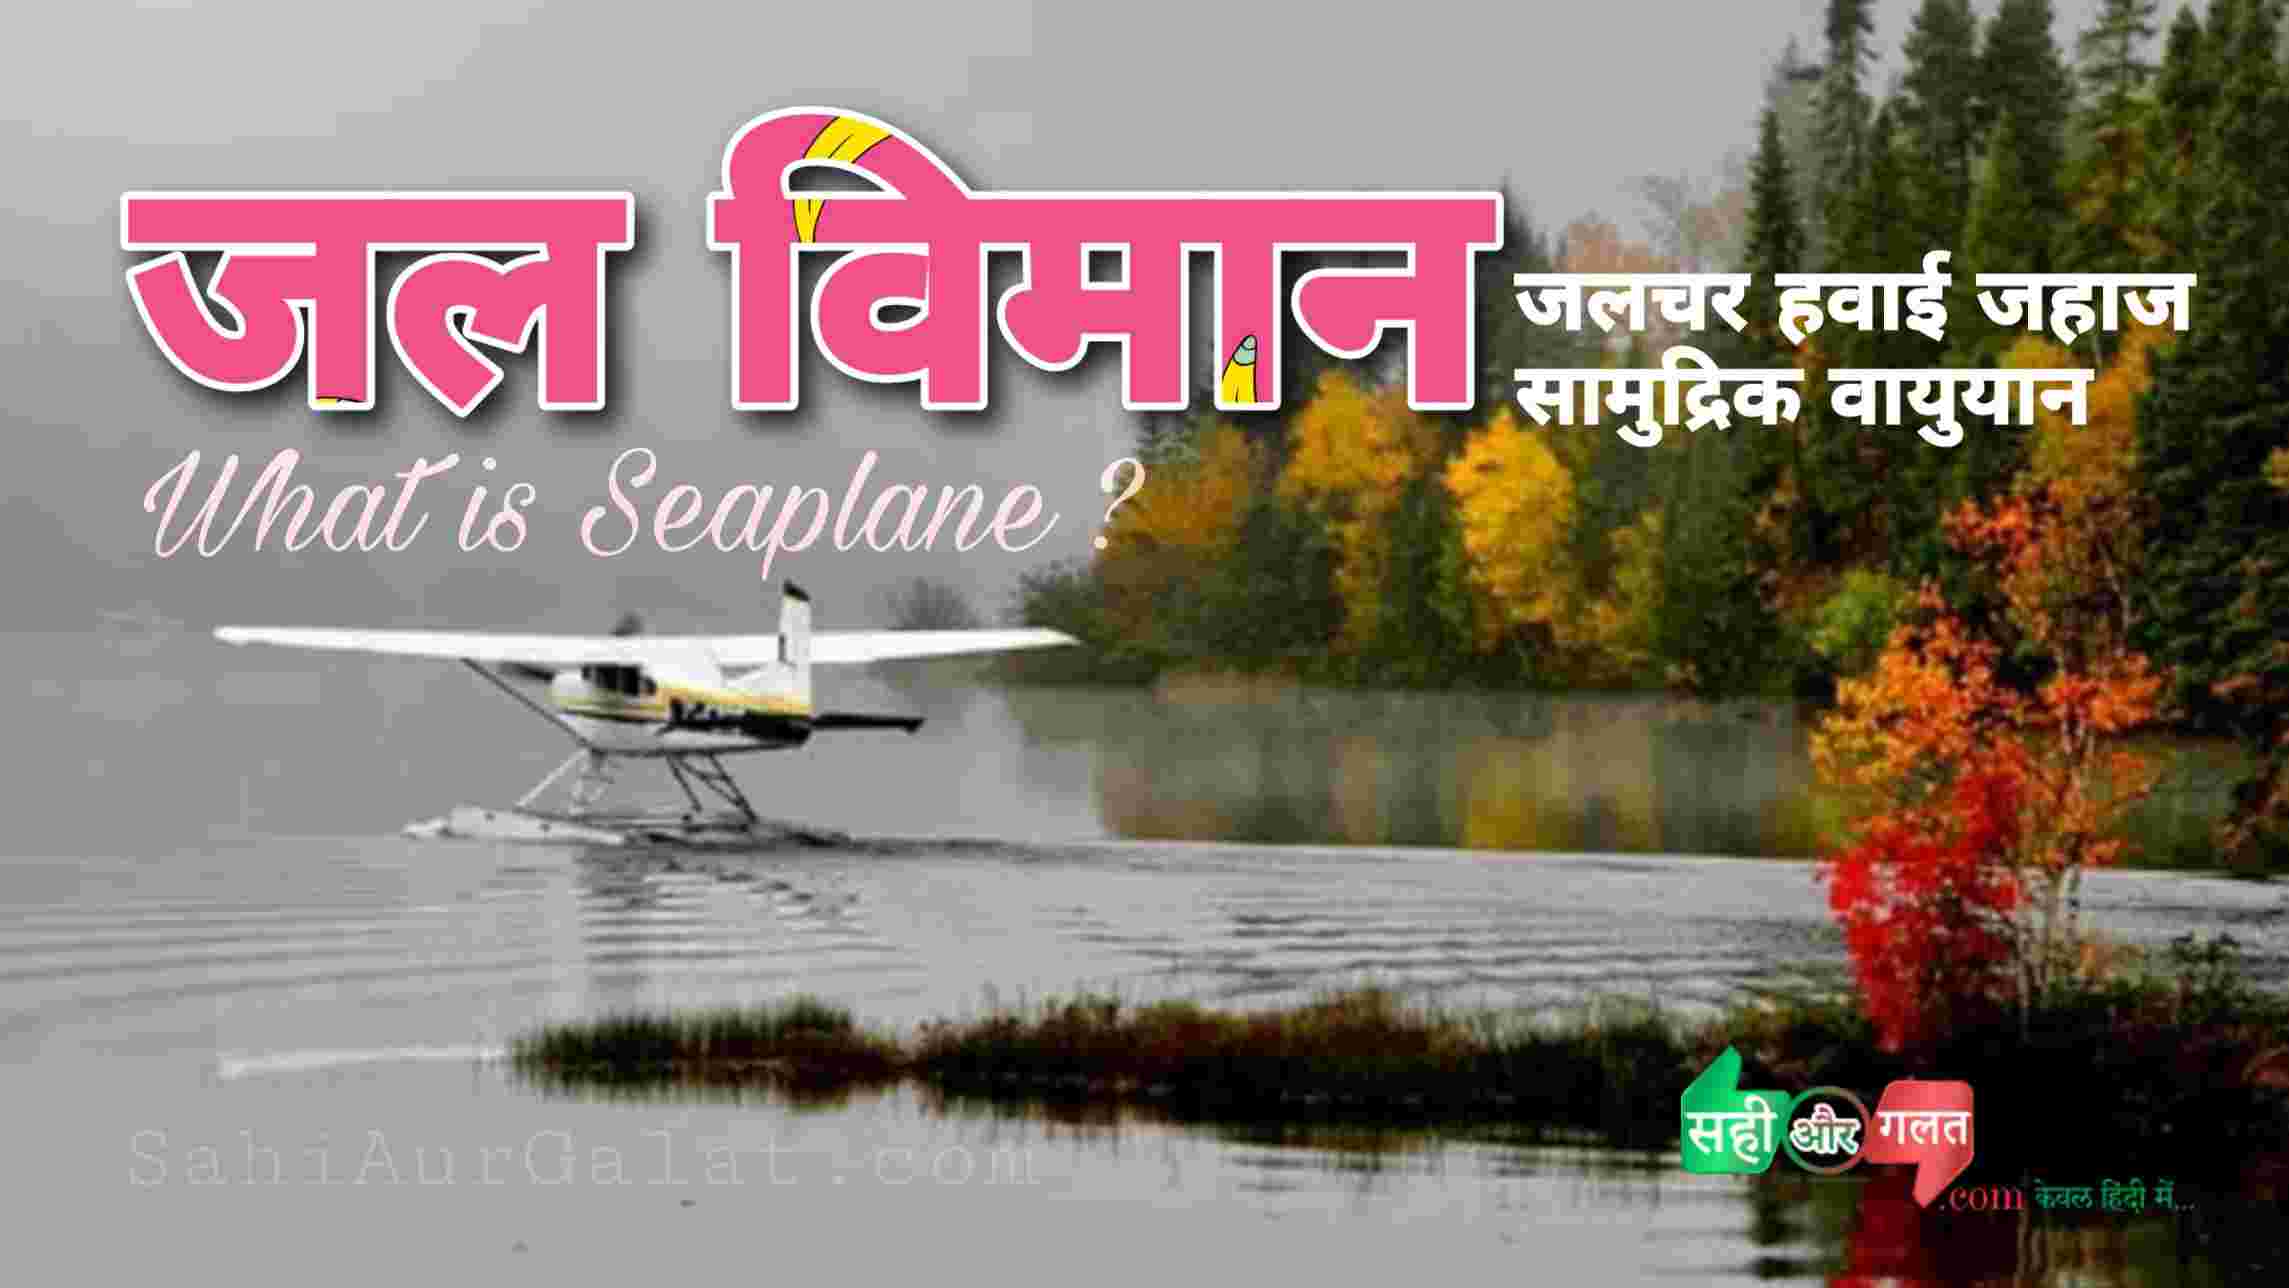 Seaplane in hindi thumbnail